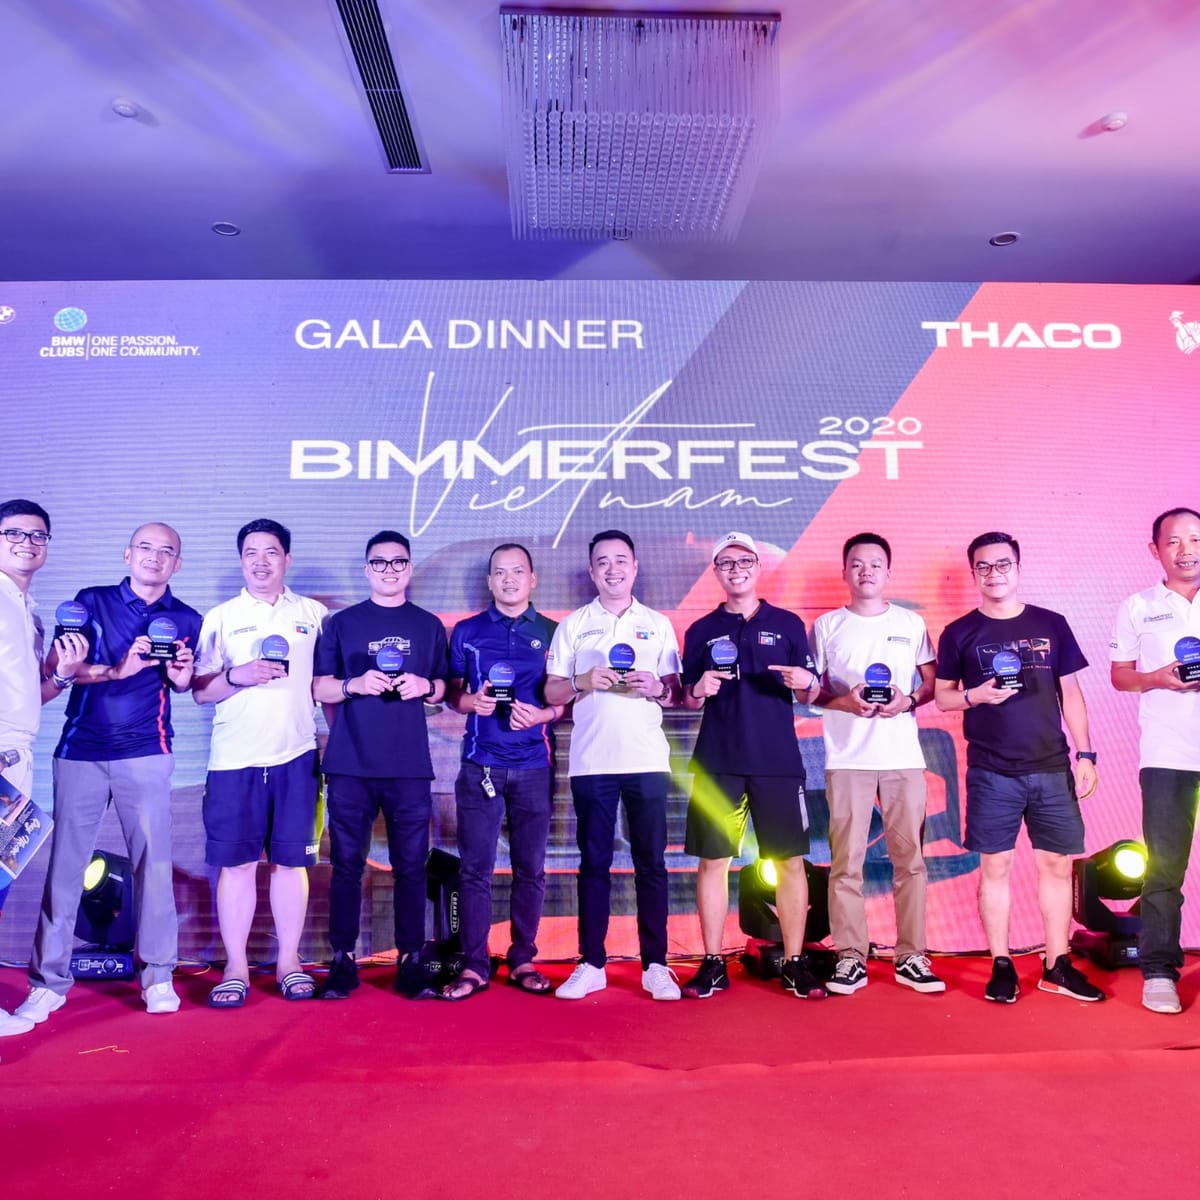 [Gallery] Bimmerfest Vietnam 2020 - album ảnh Gala Dinner (by 117 Media)